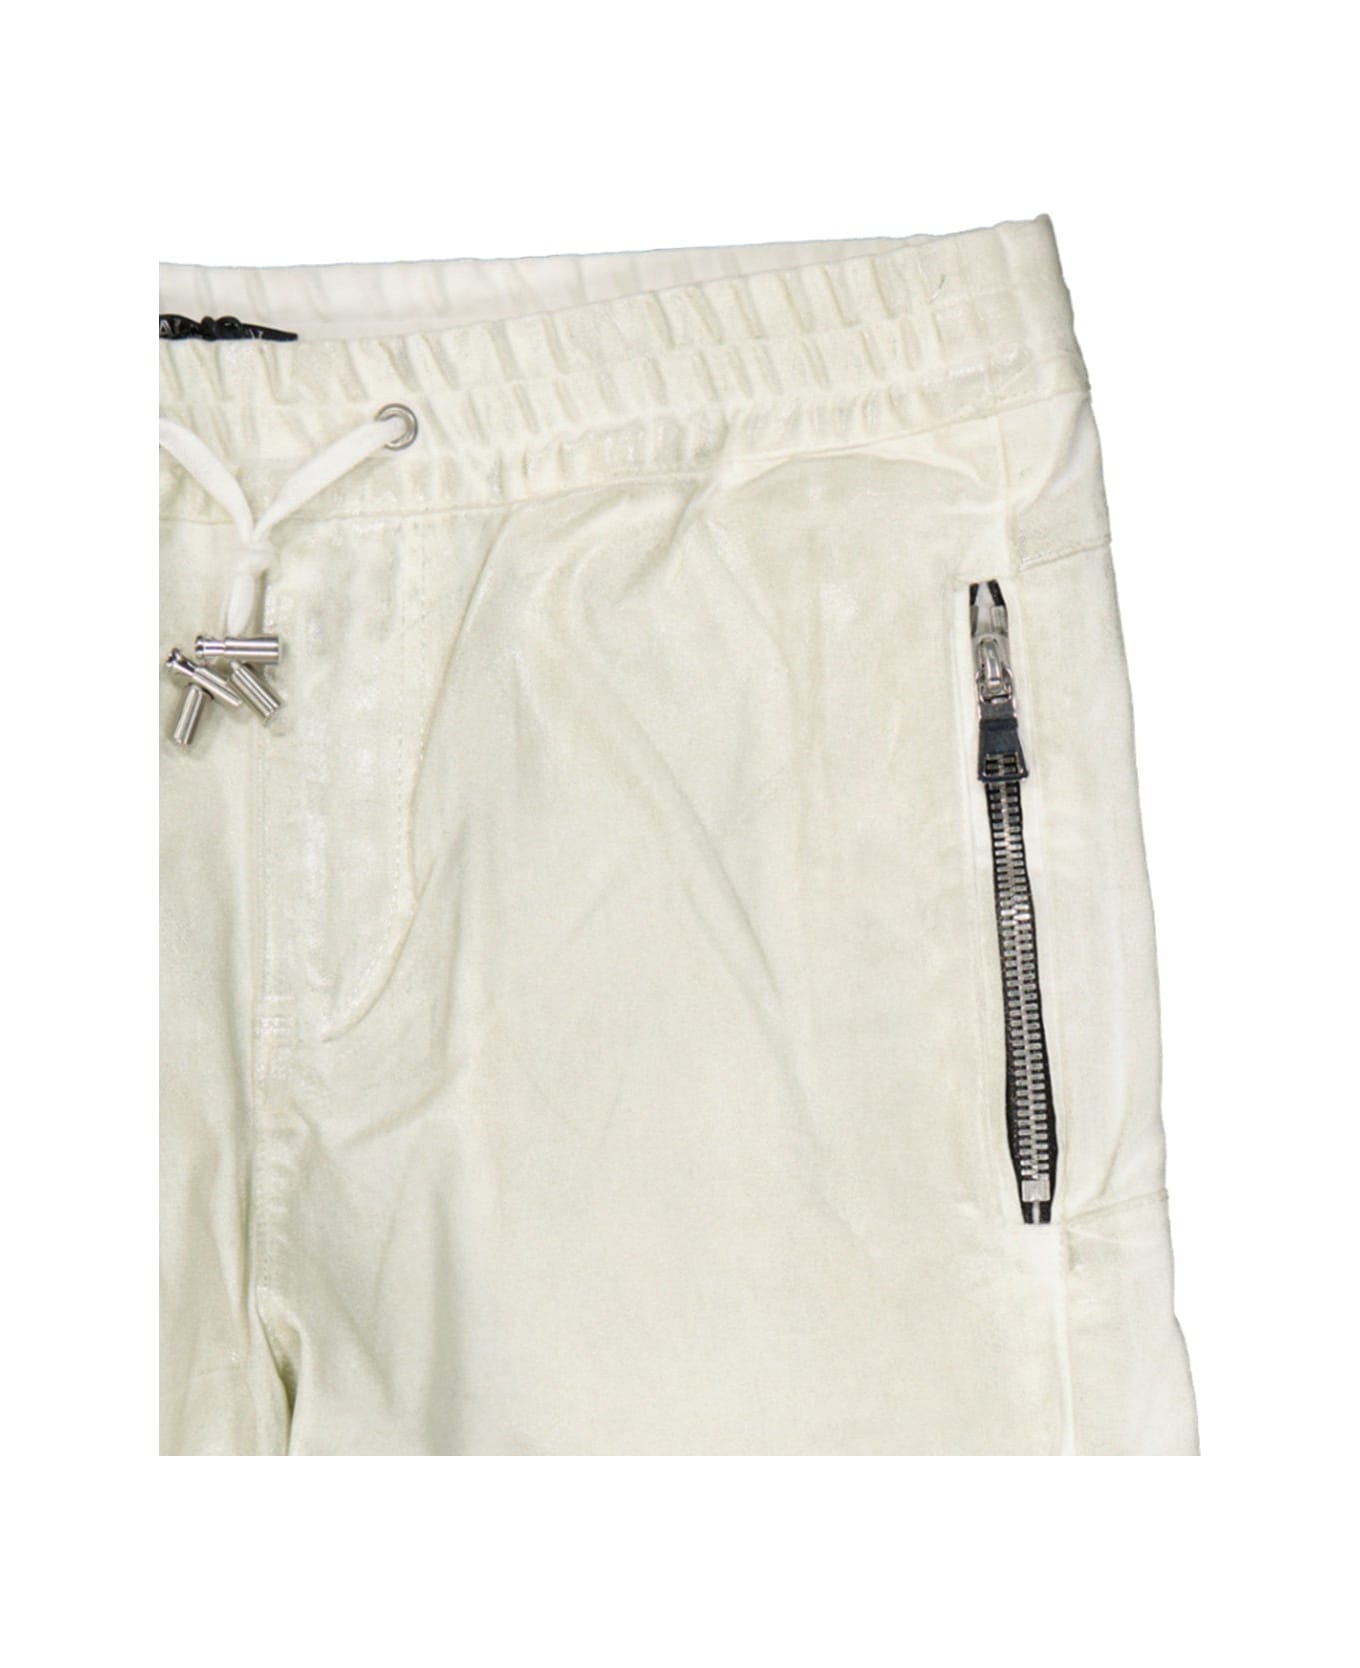 Balmain Cotton Glitter Pants - White ボトムス